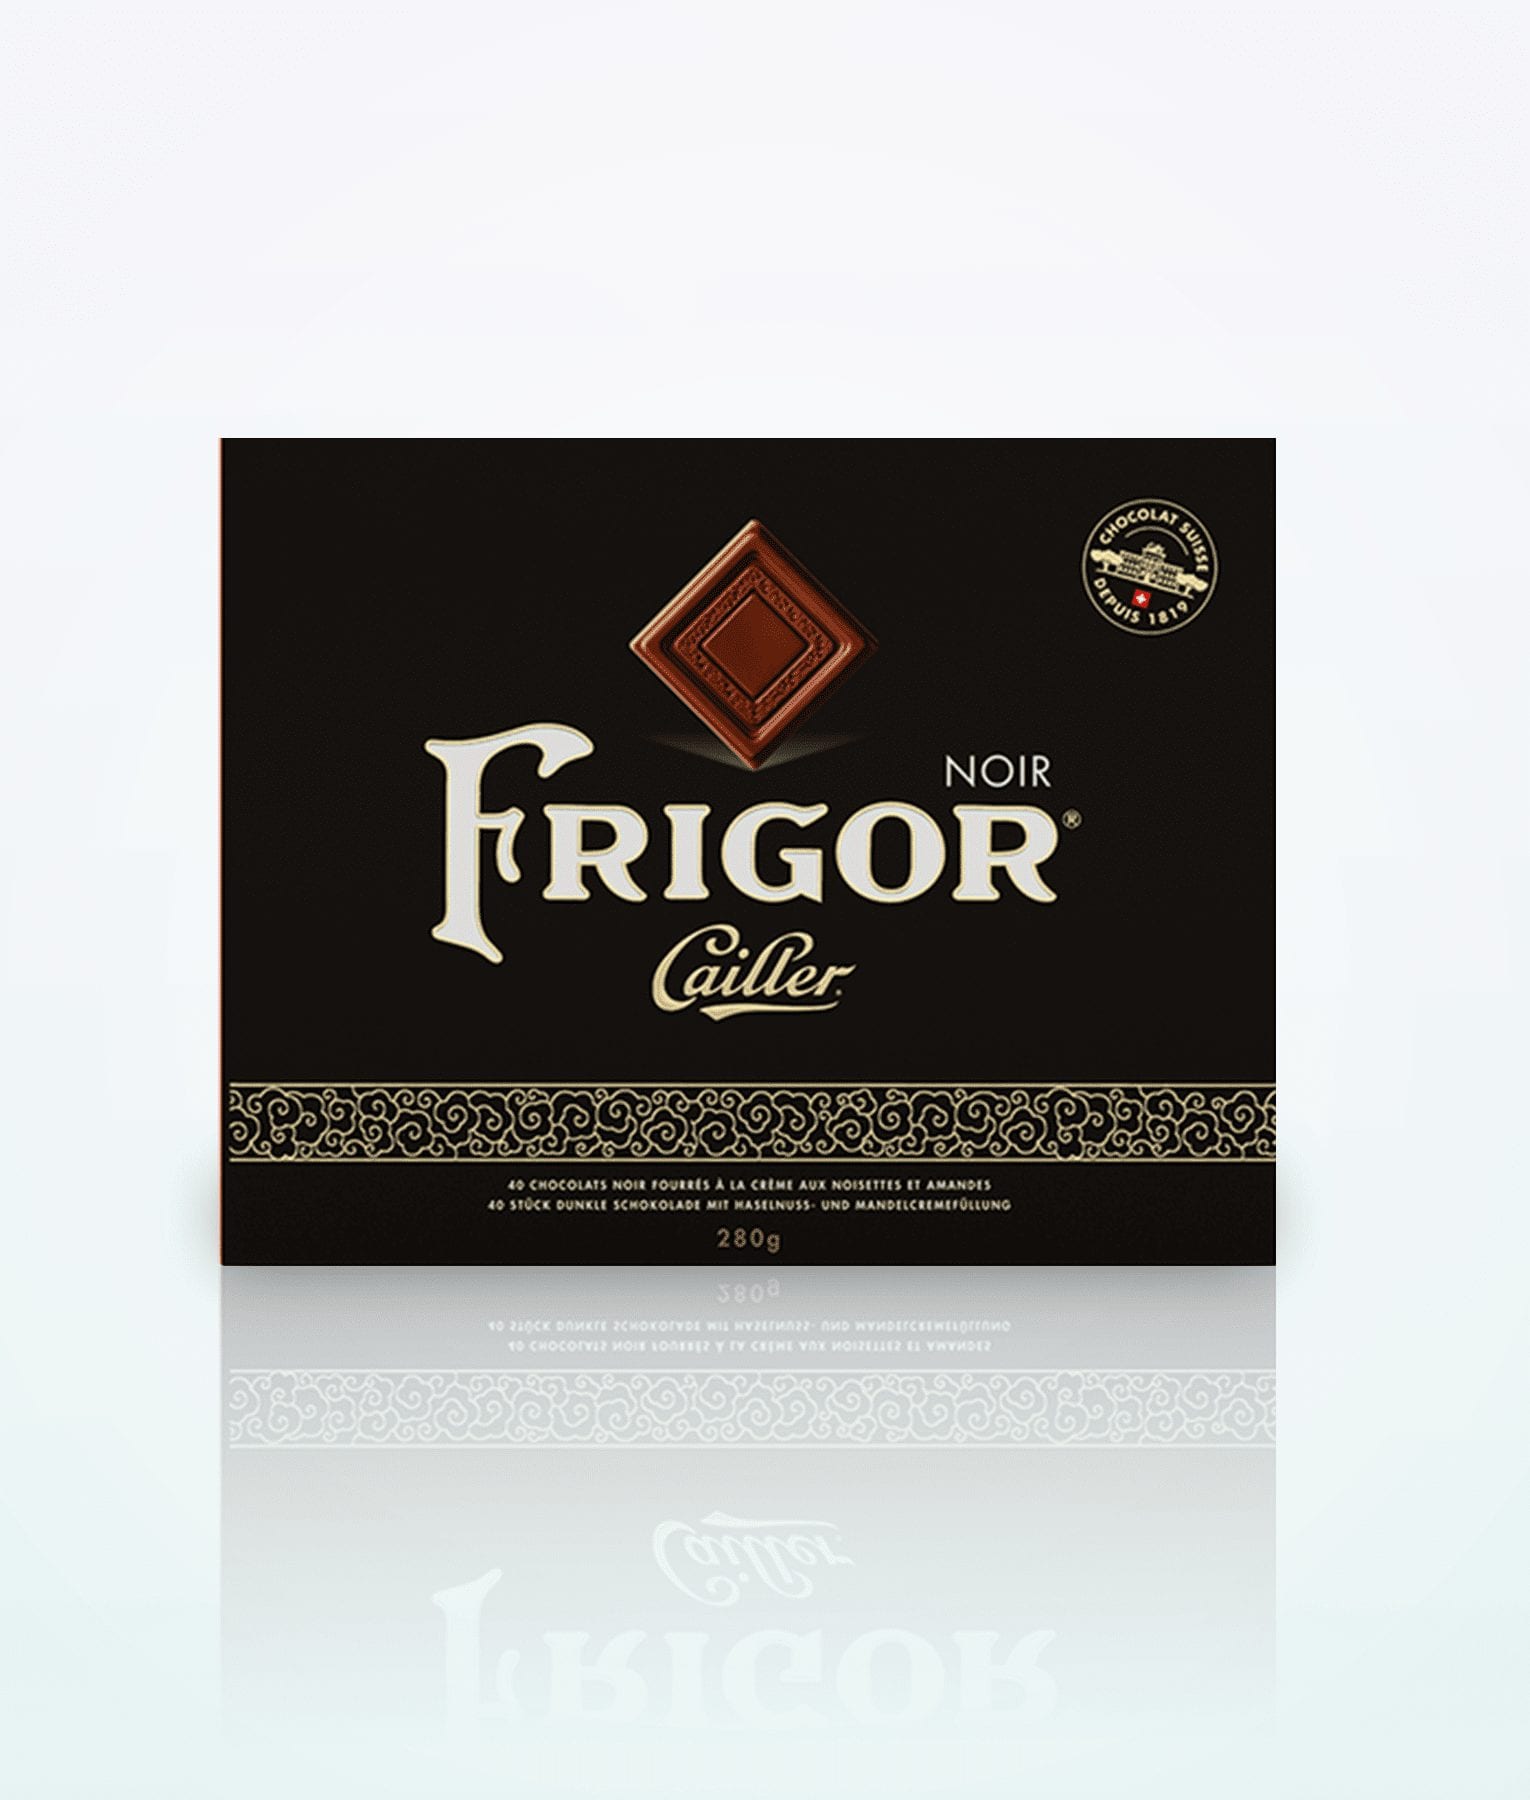 cailler-frigor-dark-chocolate-box